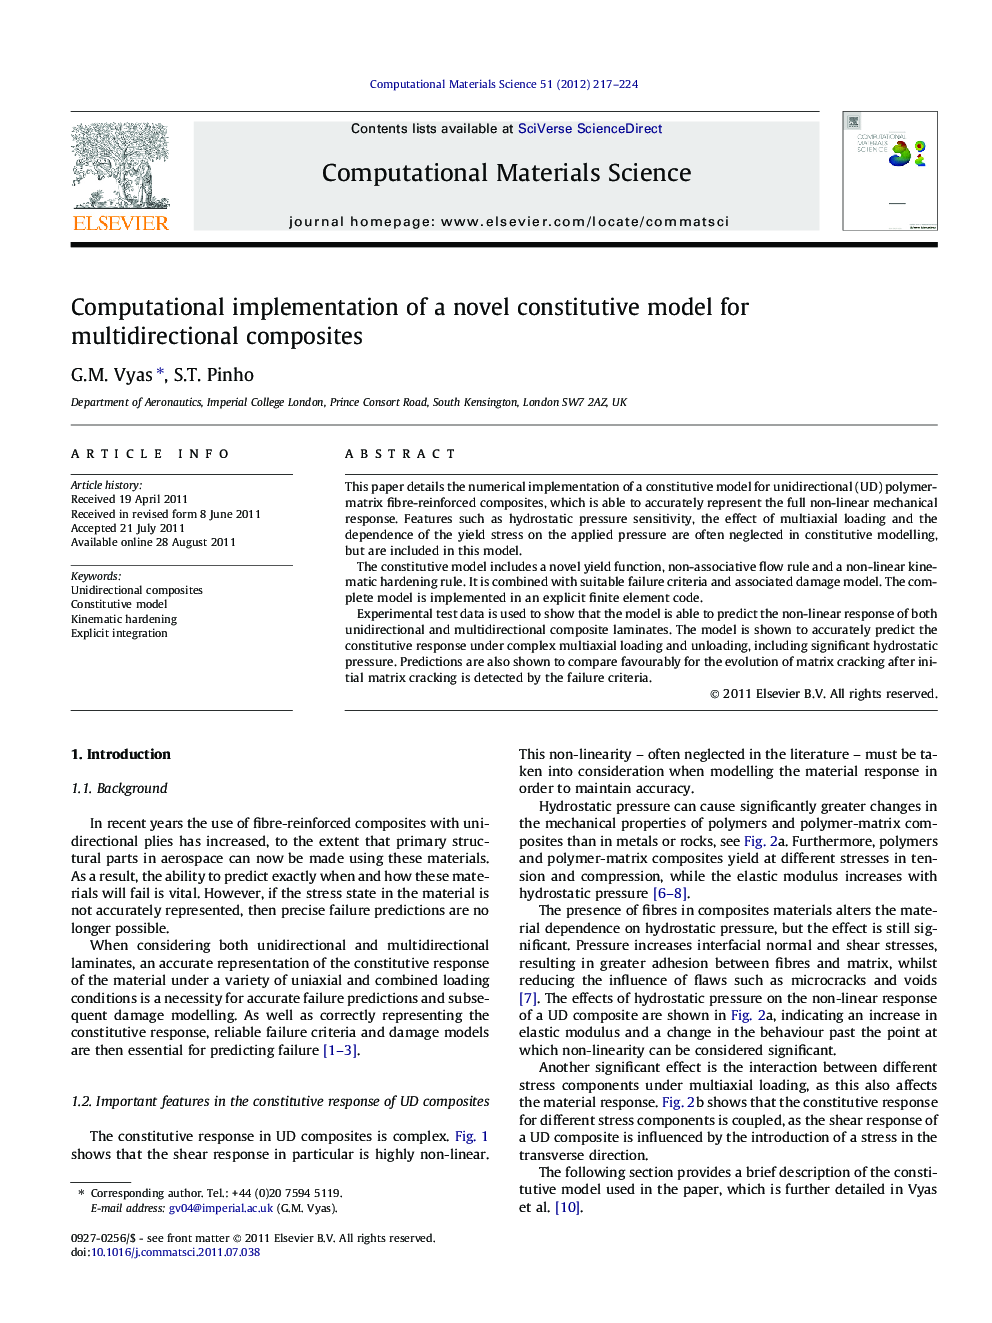 Computational implementation of a novel constitutive model for multidirectional composites